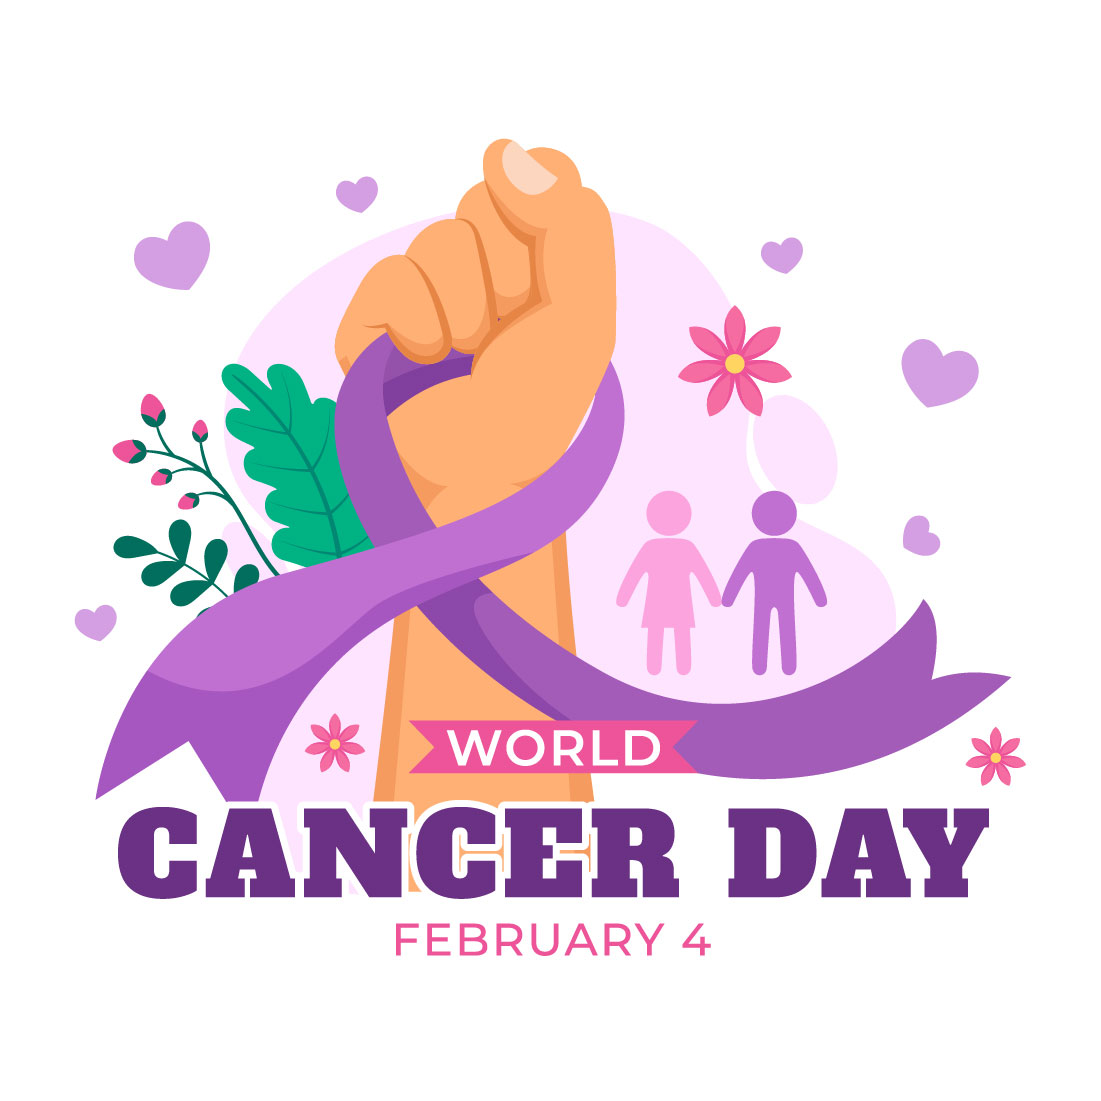 13 World Cancer Day Illustration cover image.